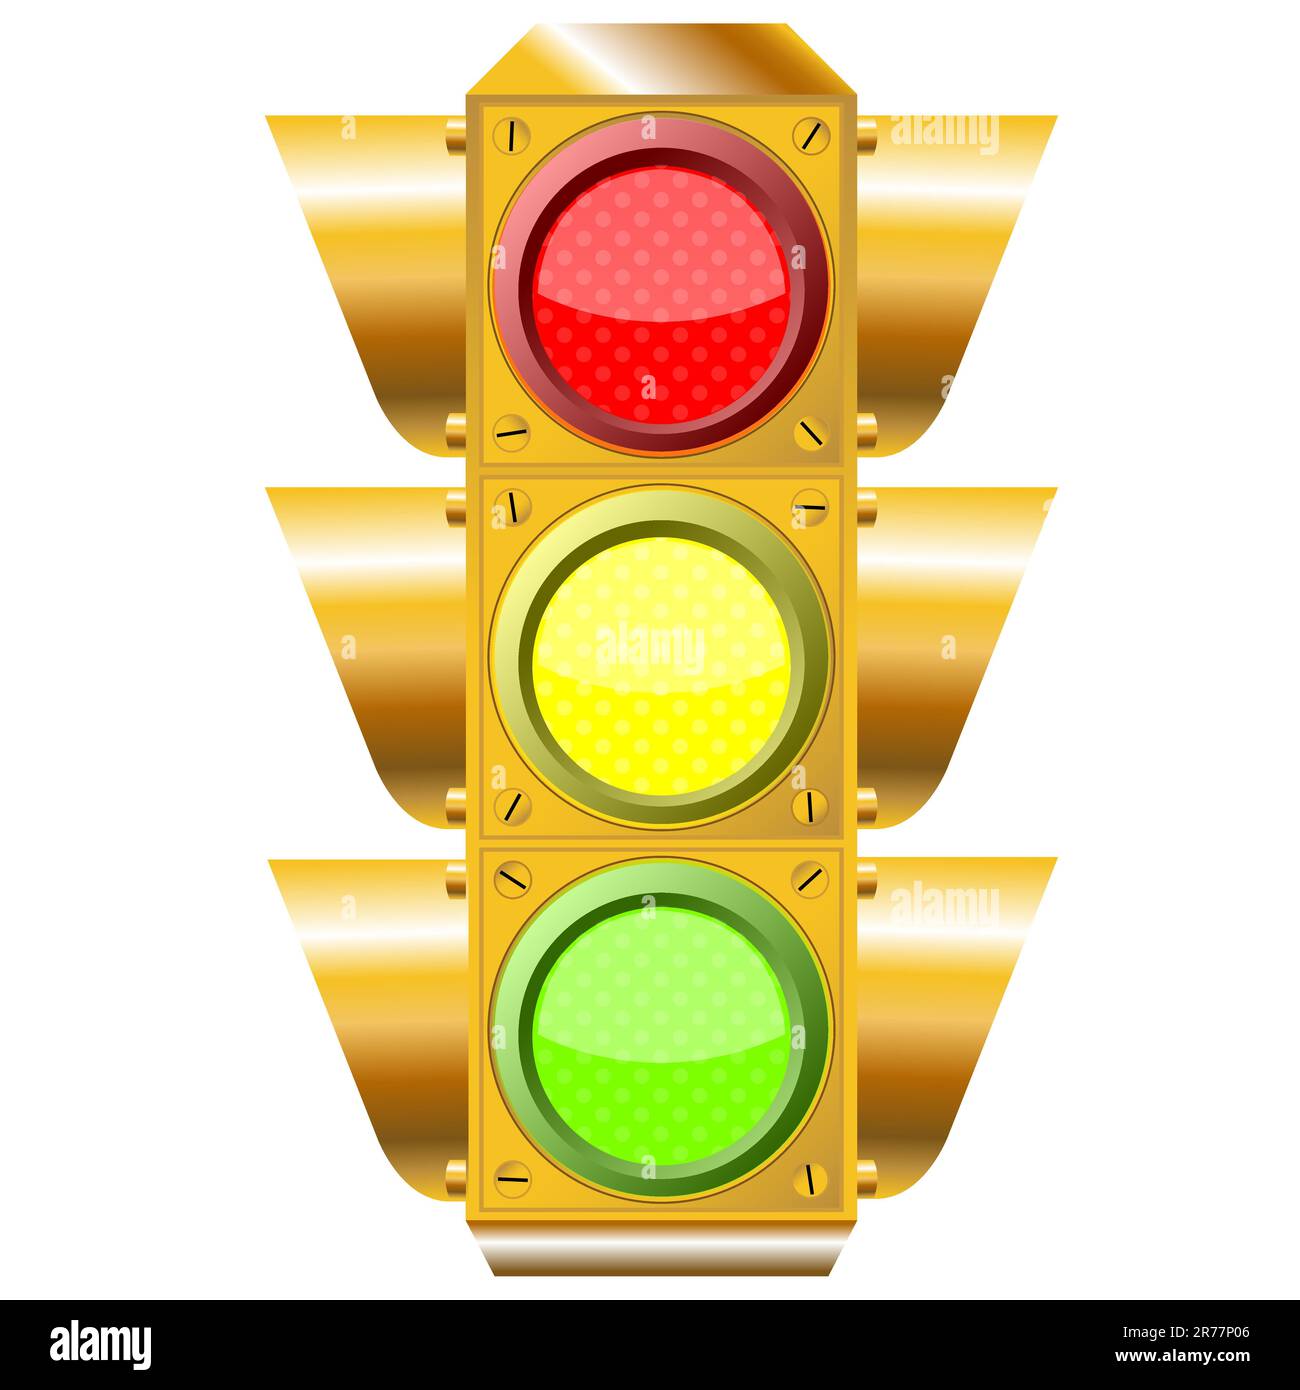 cross road traffic lights over white background, abstract vector art illustration Stock Vector